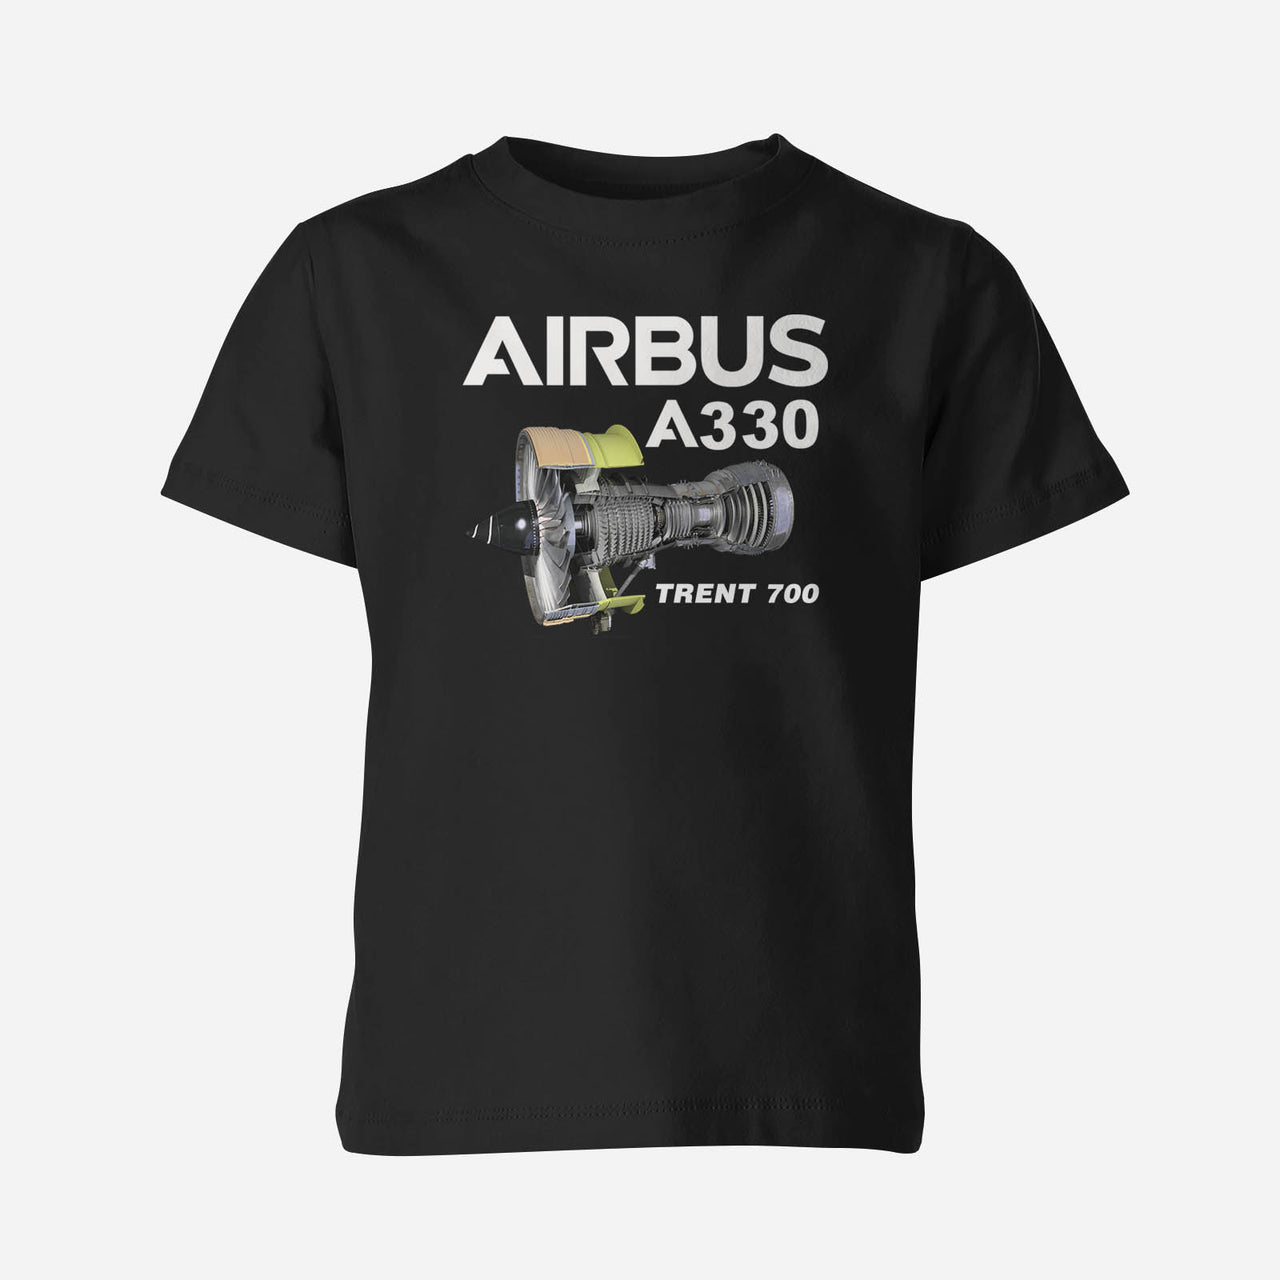 Airbus A330 & Trent 700 Engine Designed Children T-Shirts